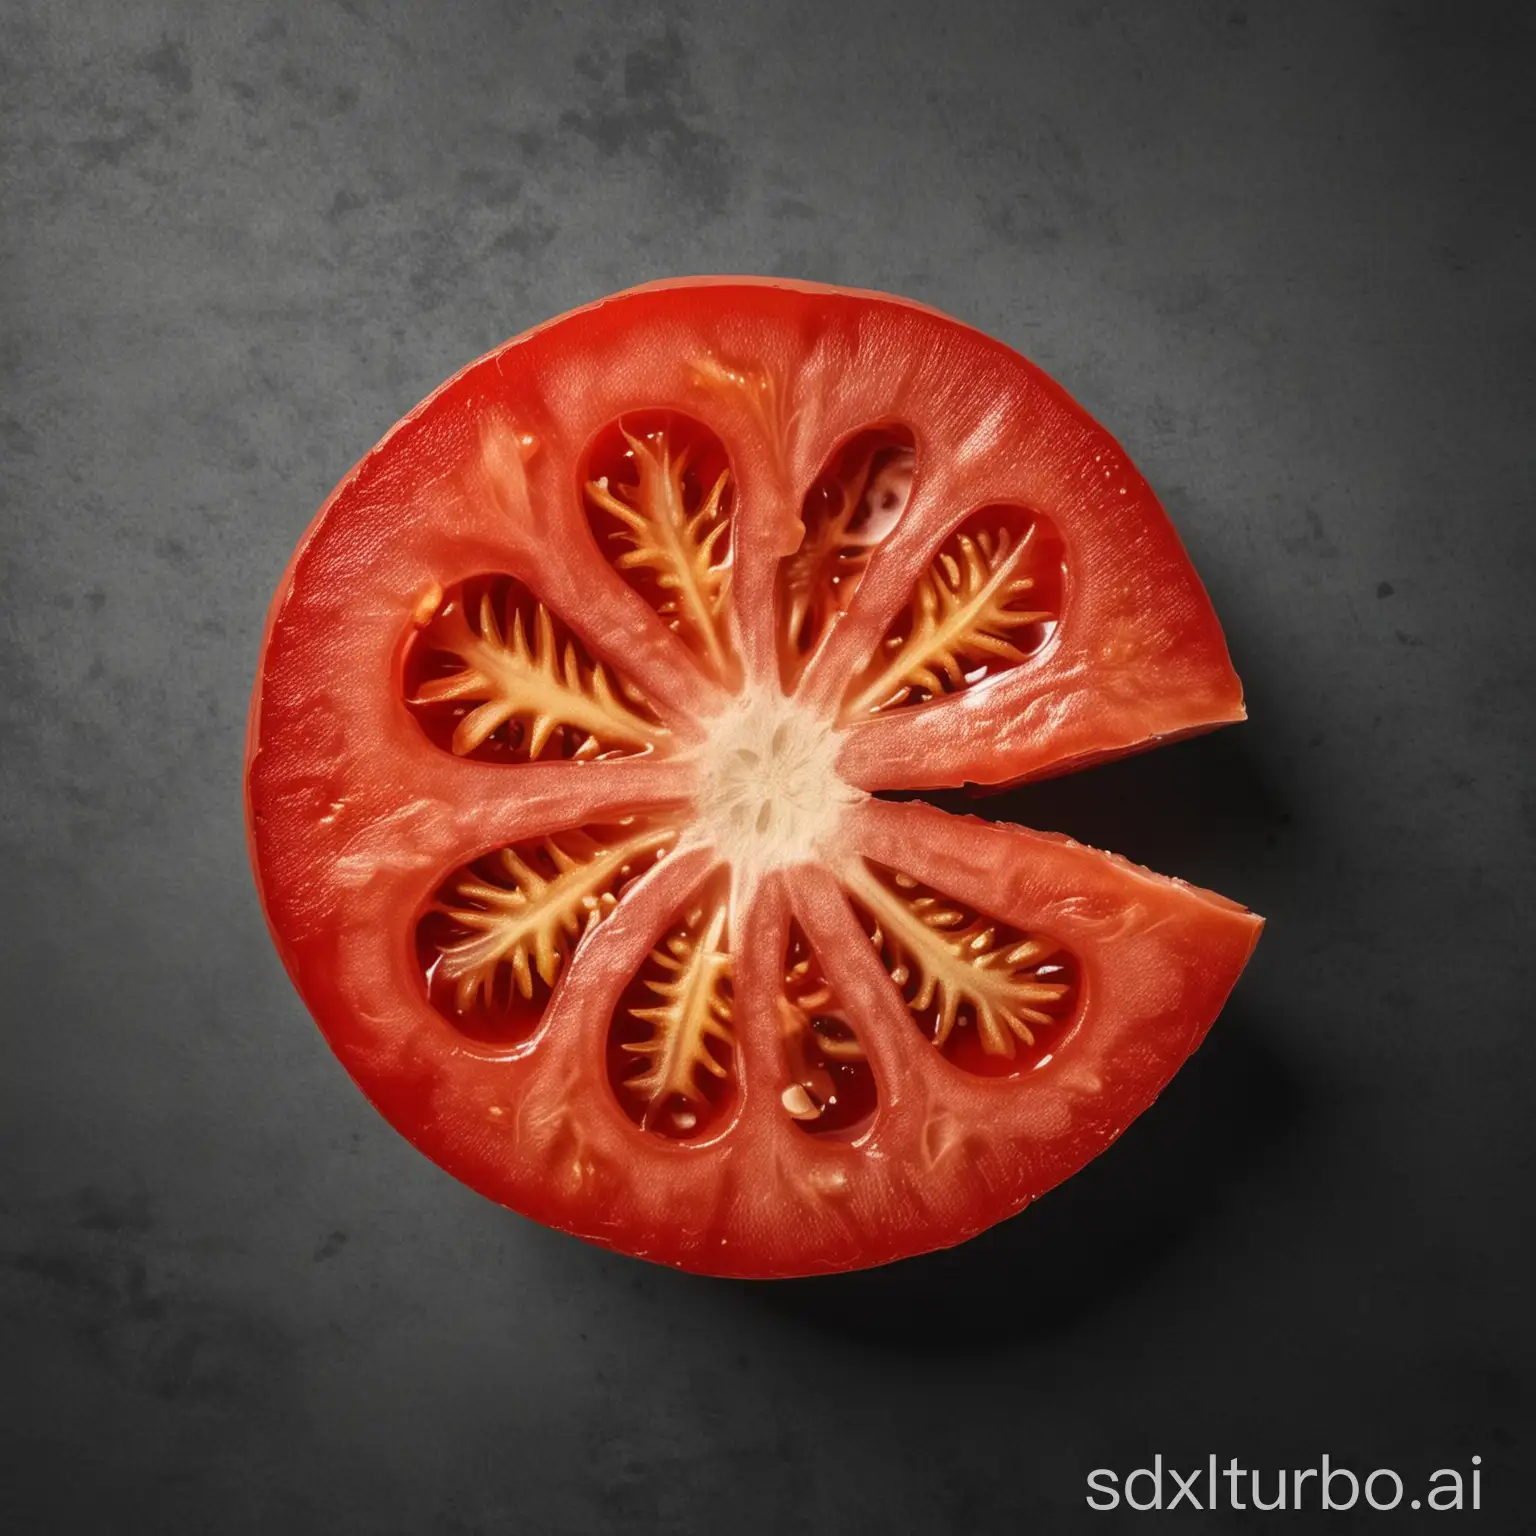 Vibrant-Photorealistic-Tomato-Slice-Fresh-Product-Shot-from-Above